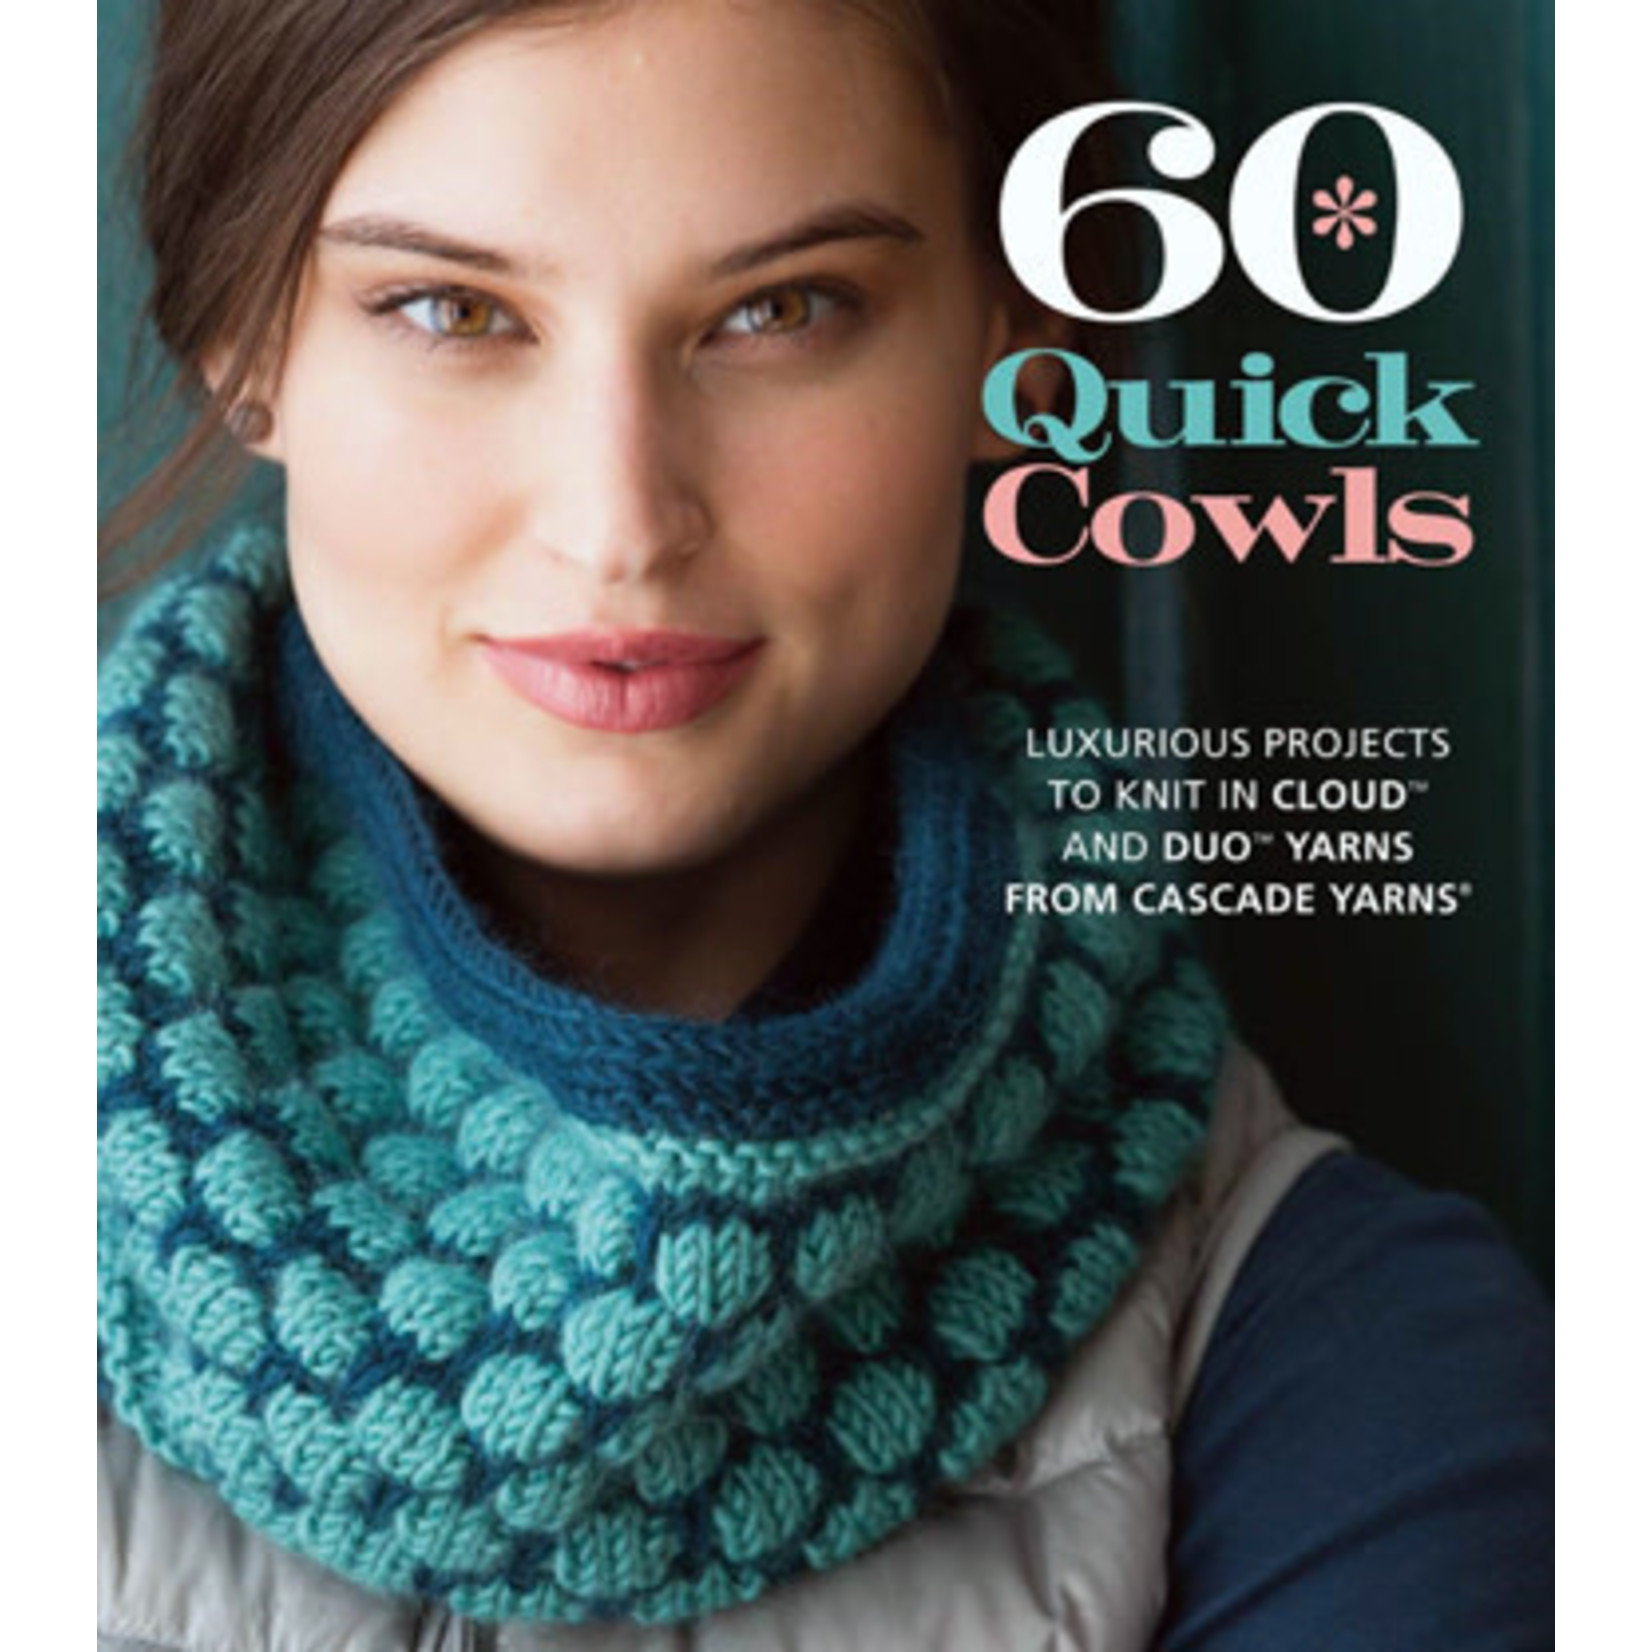 Cascade Yarns 60 Quick Knit Book Series